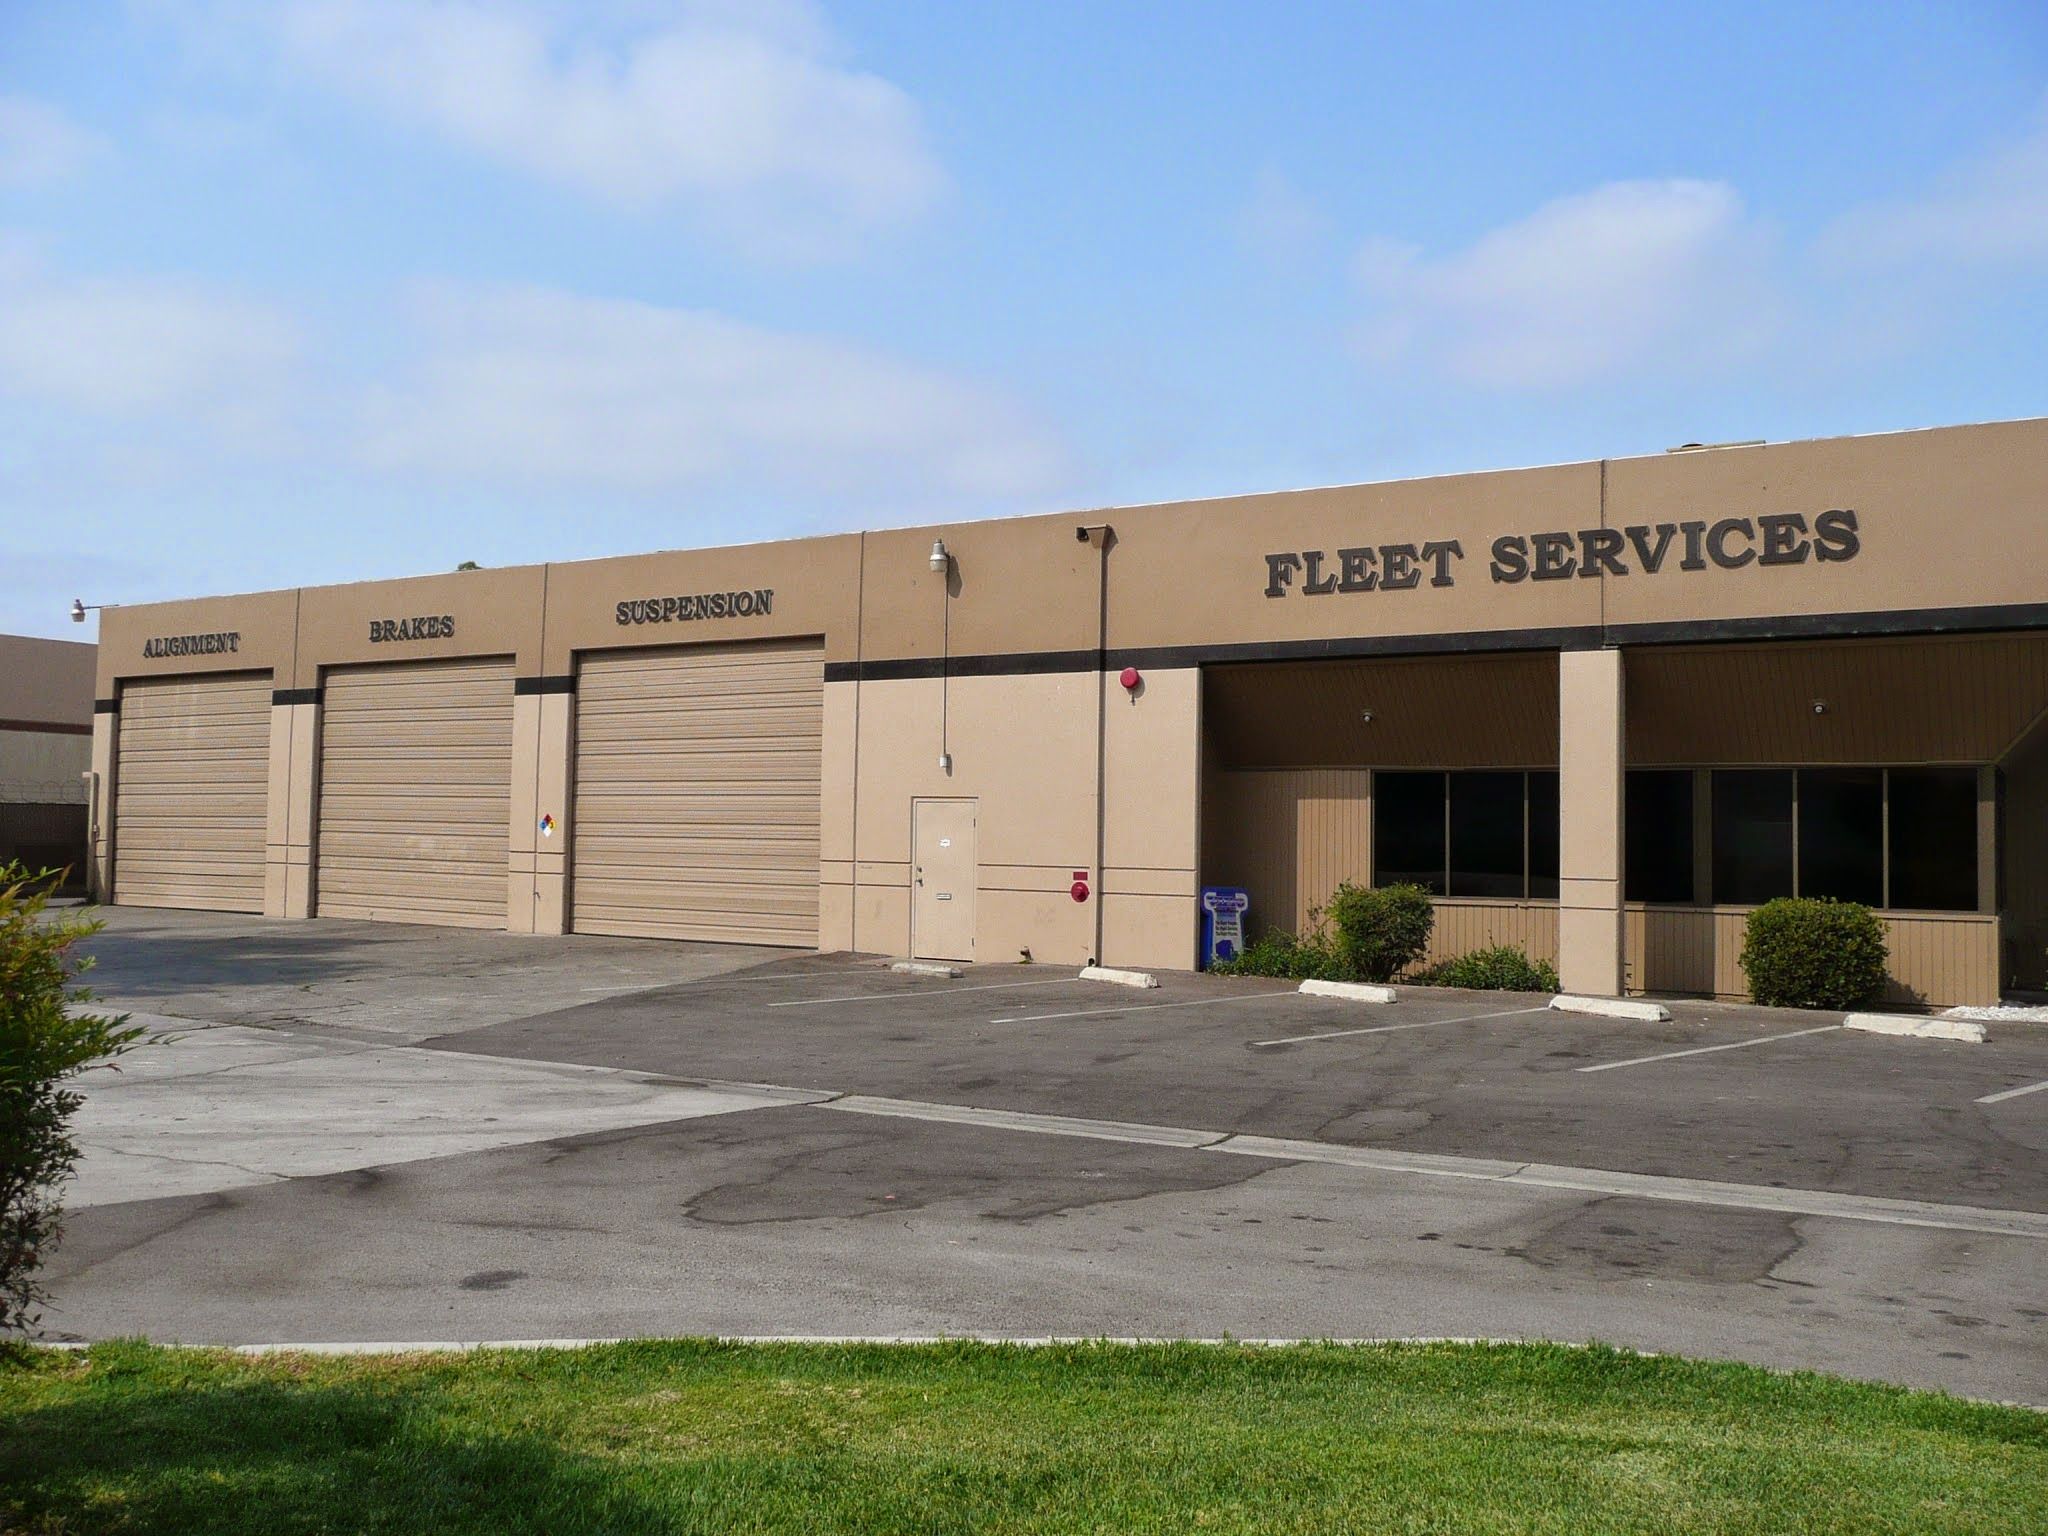 Fleet Services